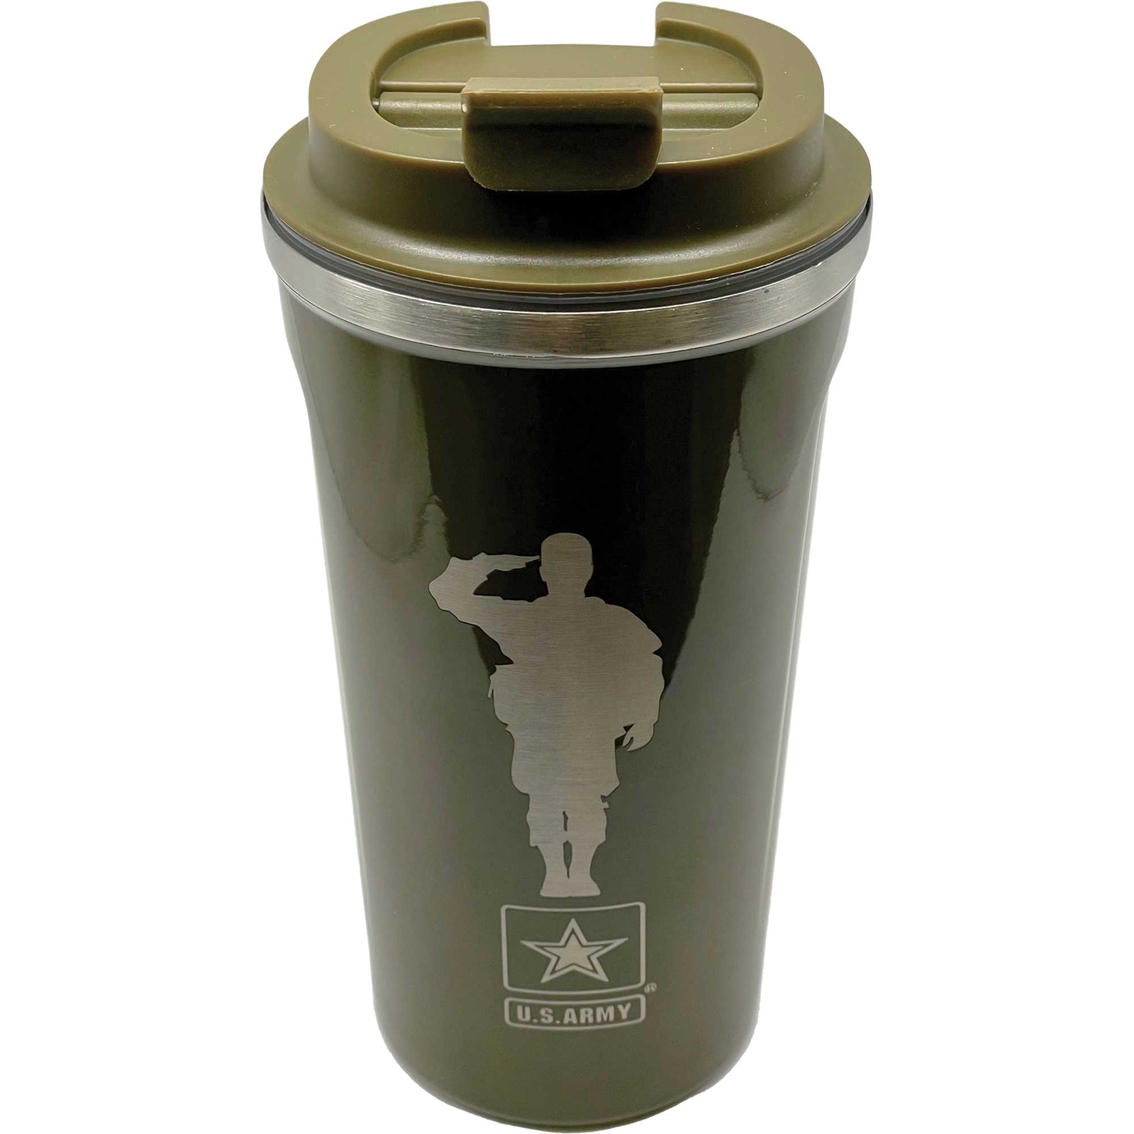 Uniformed Army Husband Father Soldier Veteran 17 oz. Tall Mug - Image 2 of 4